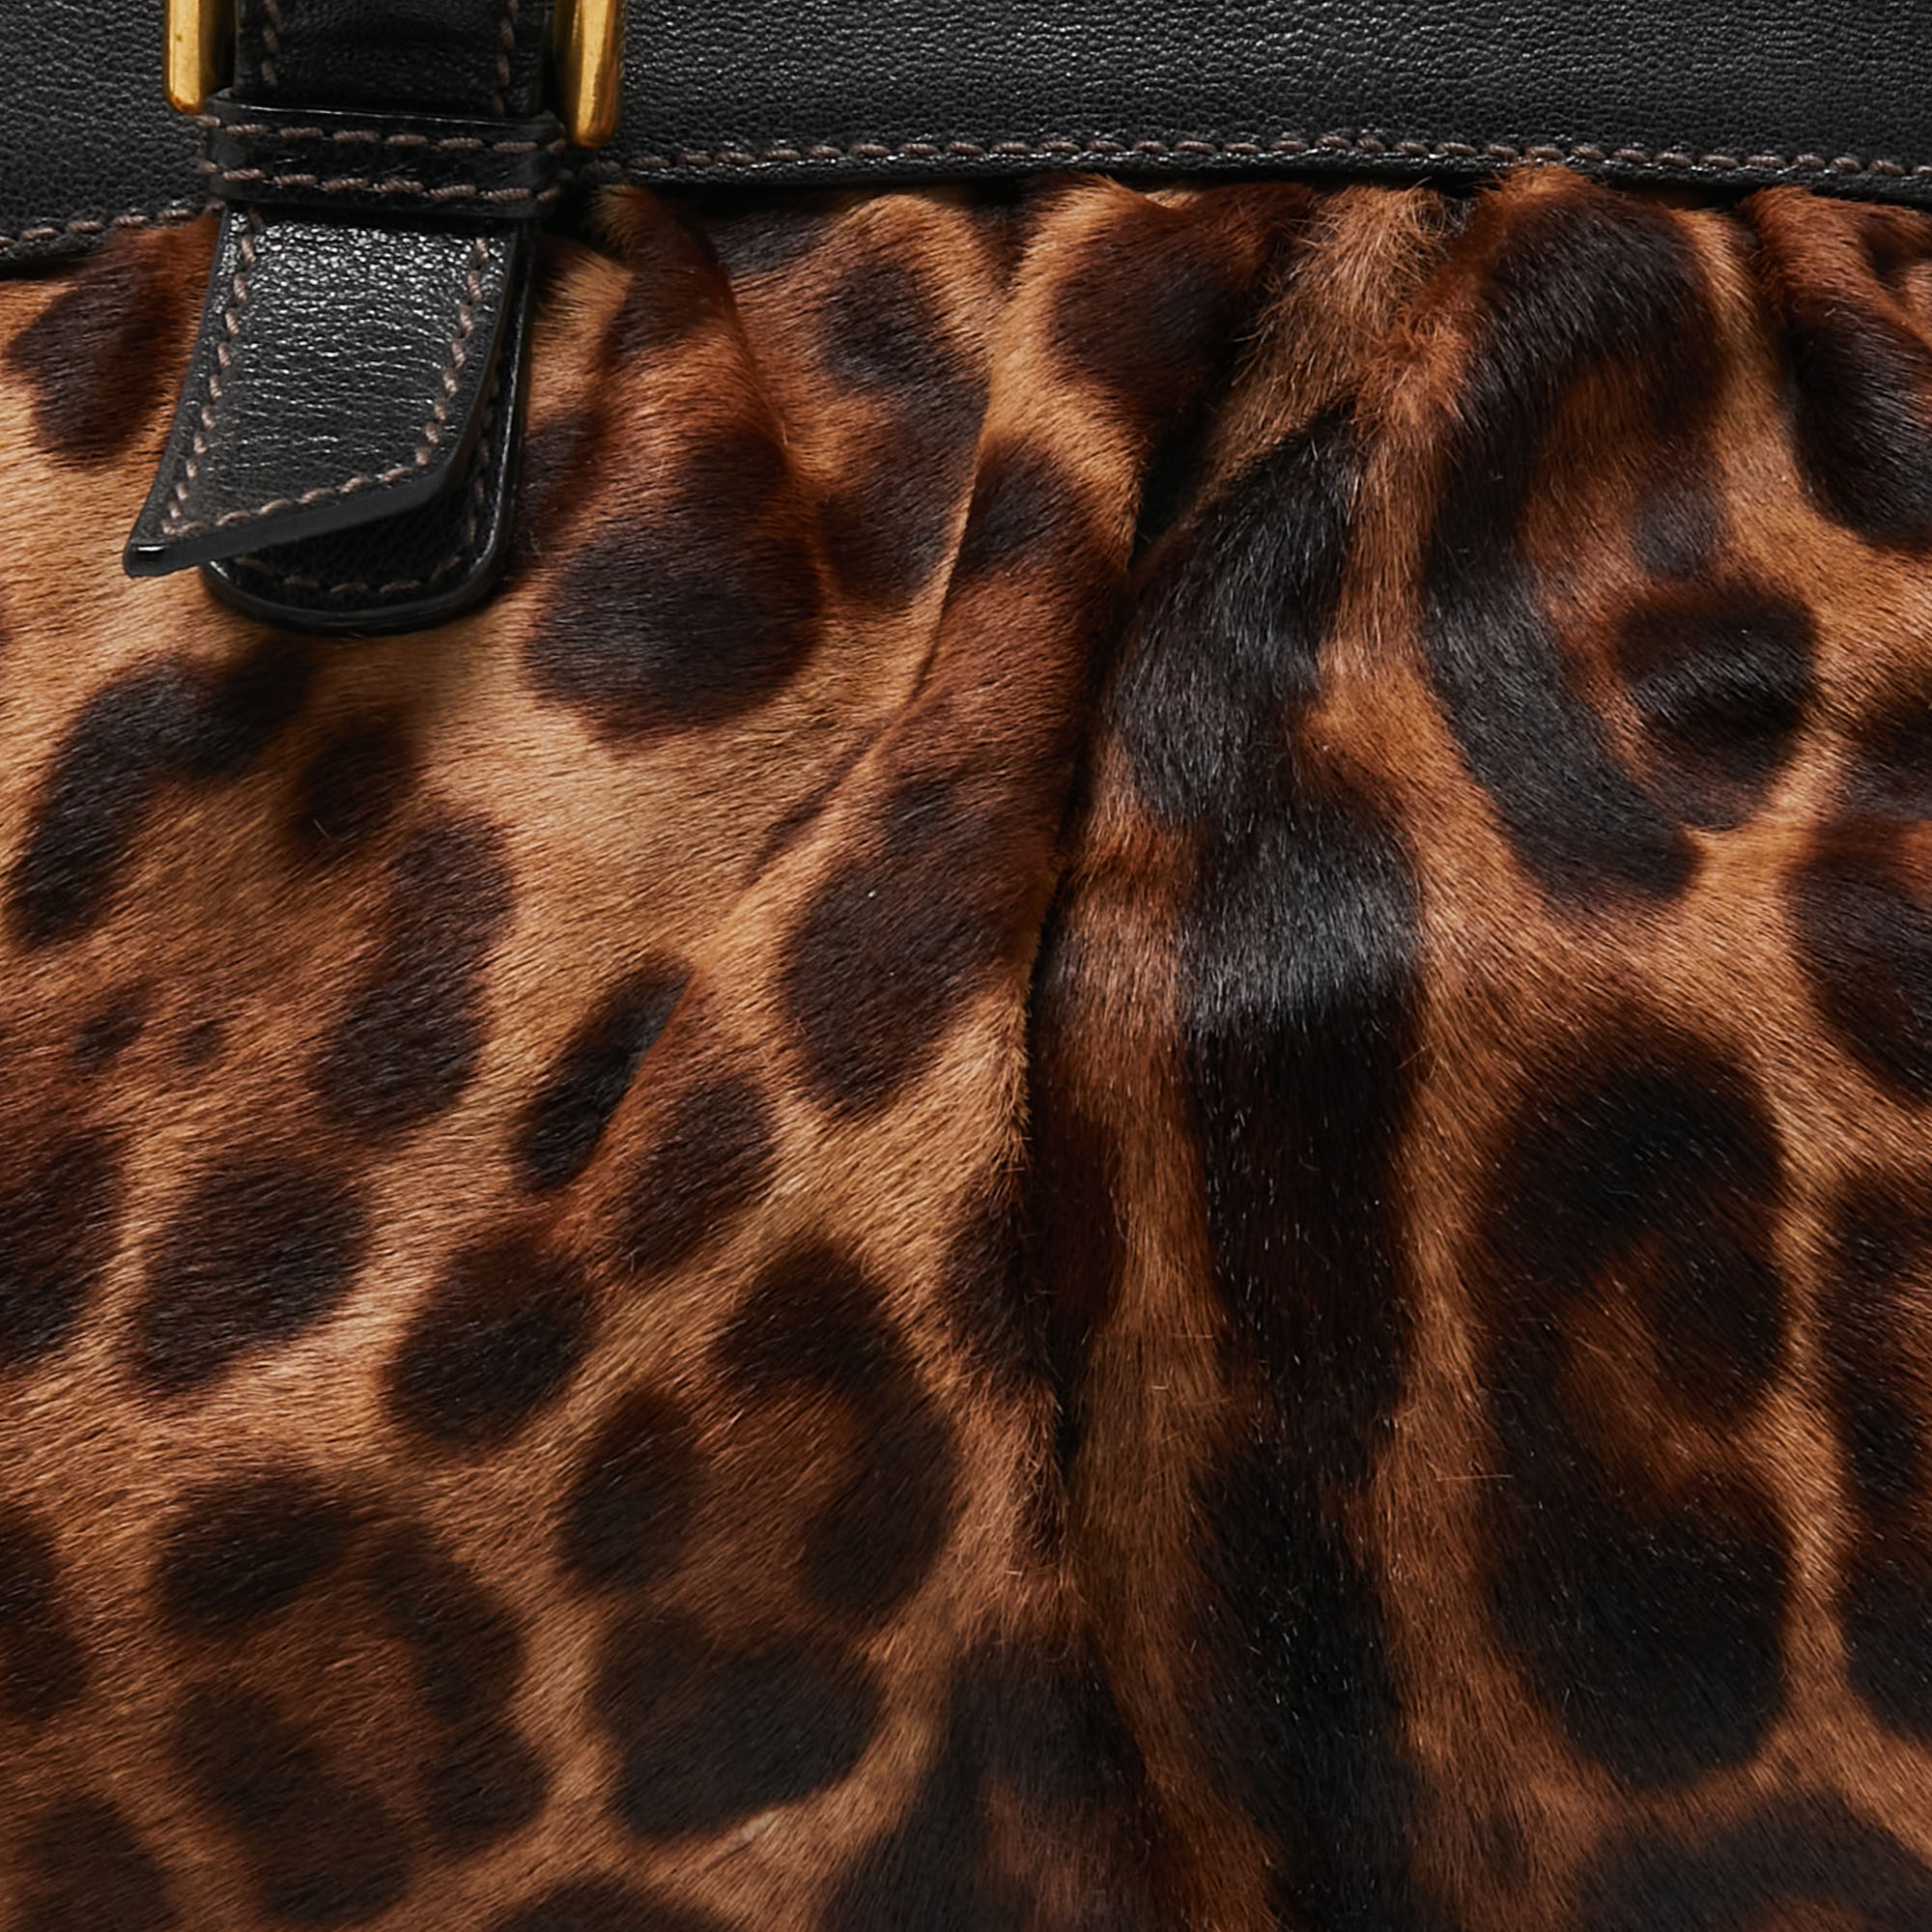 Dolce & Gabbana Black/Brown Leopard Print Calf Hair Frame Satchel